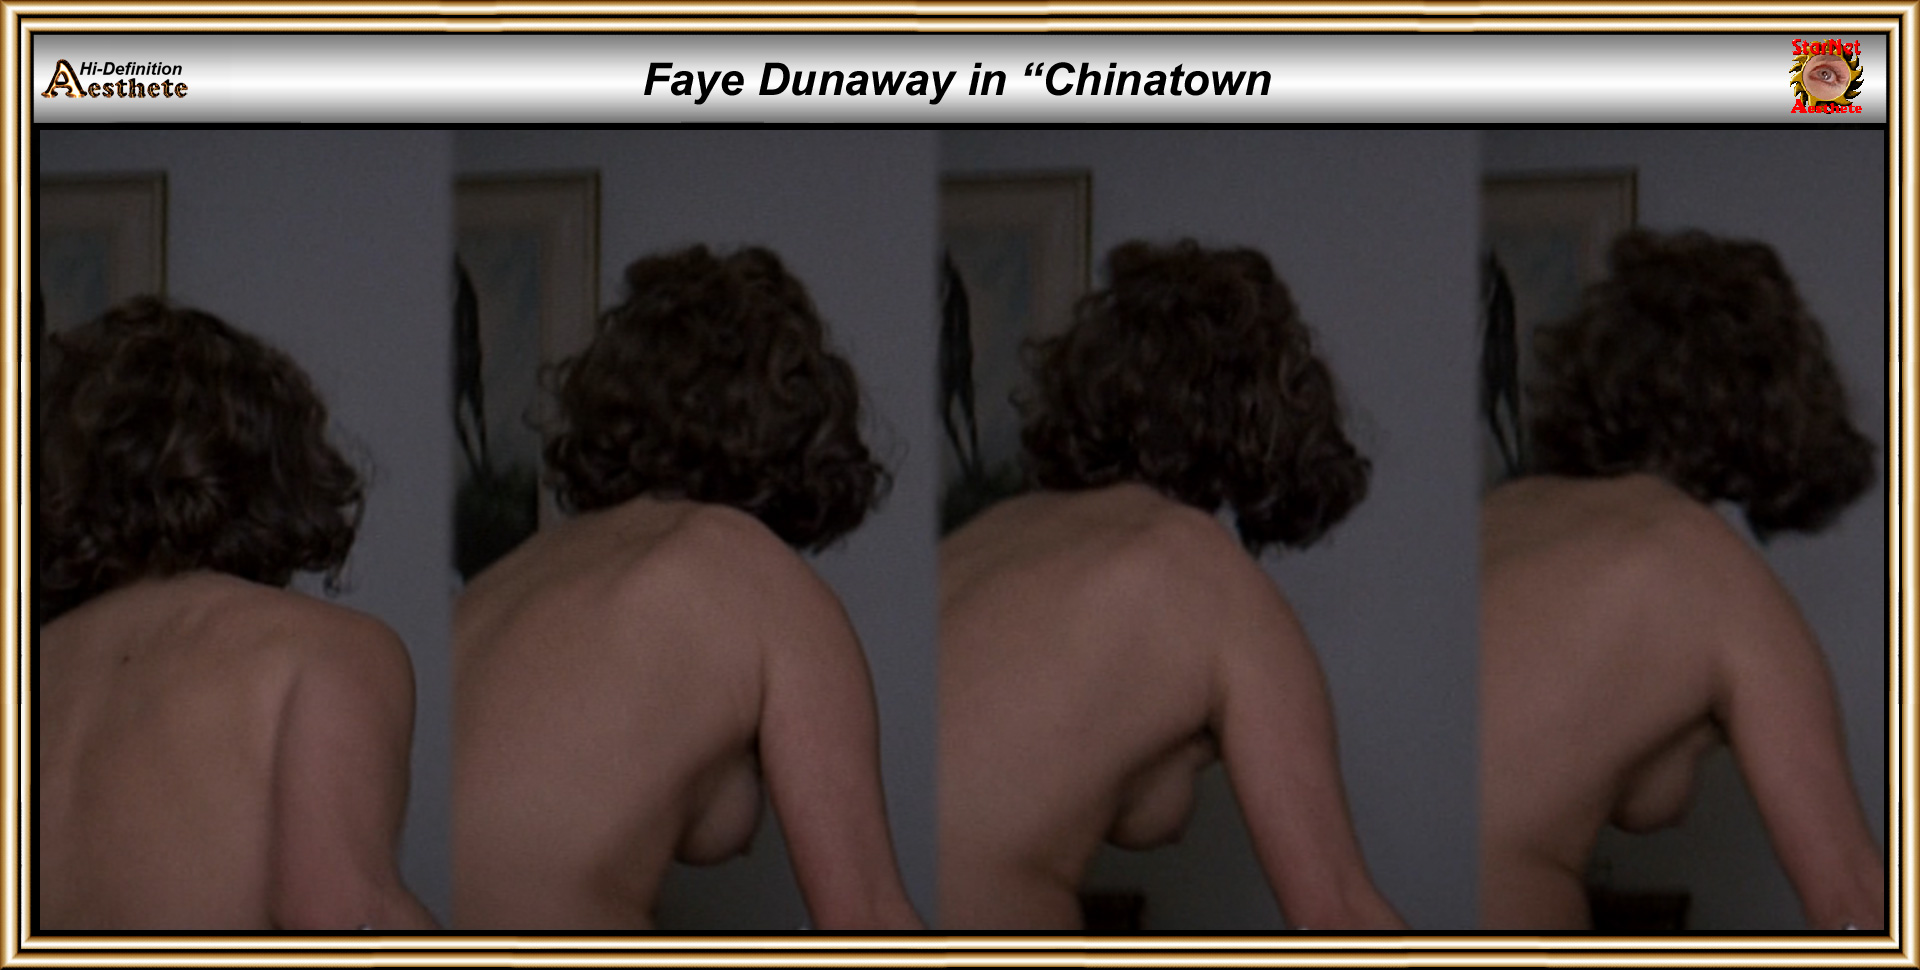 Faye Dunaway nude pics.